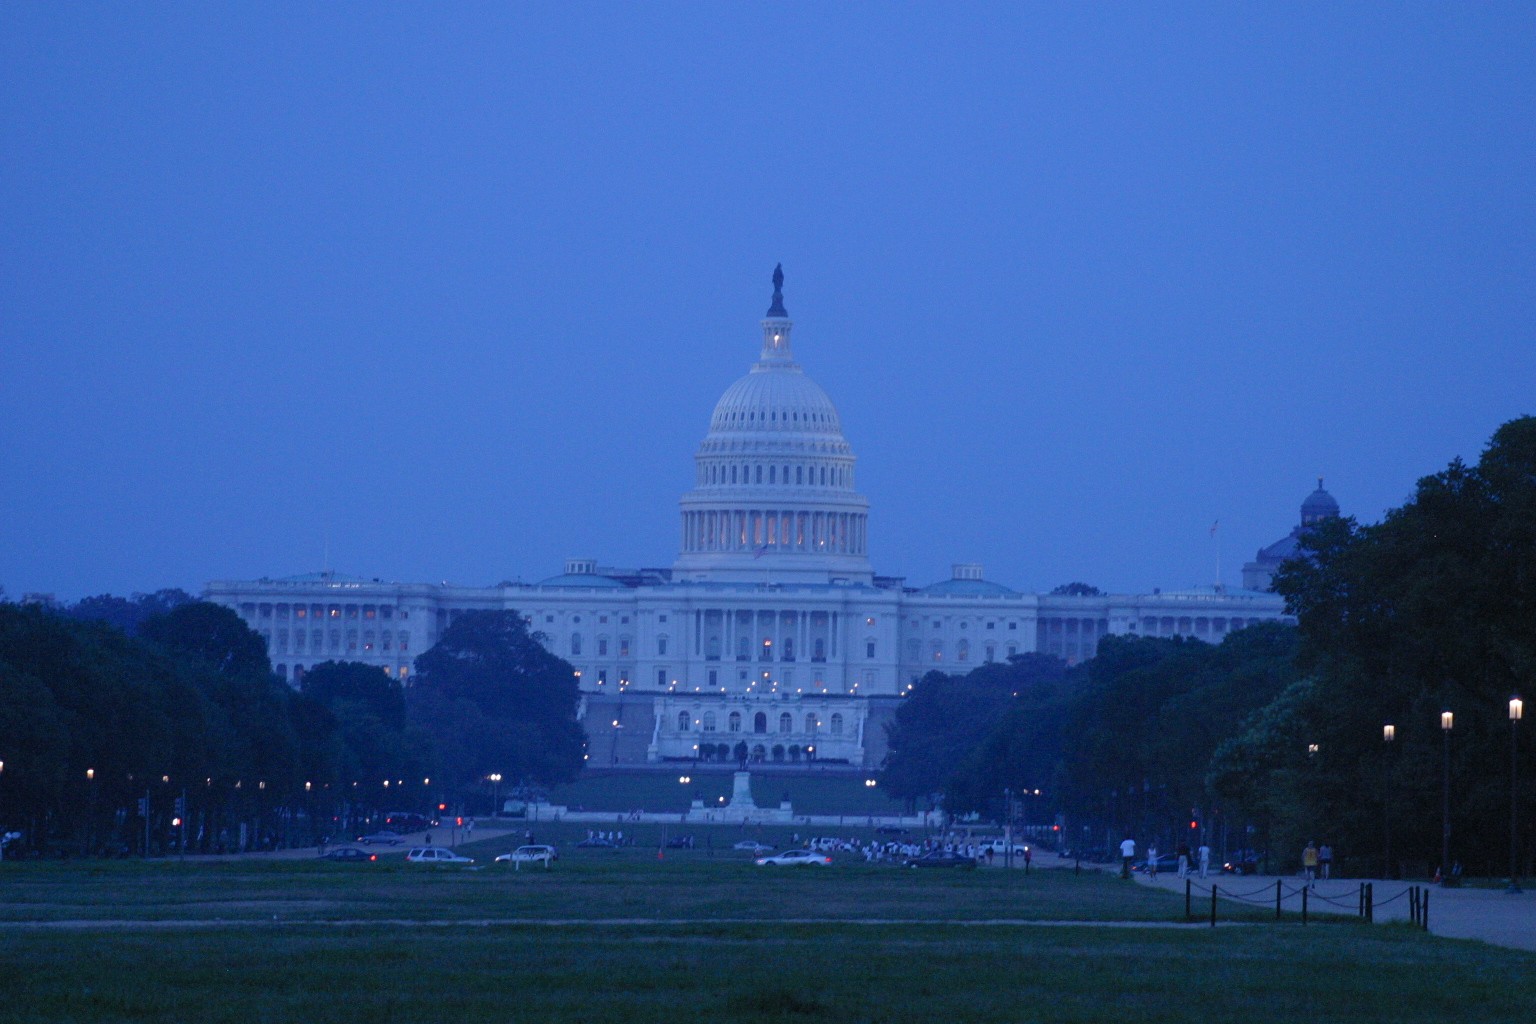 Capitol at Night far view